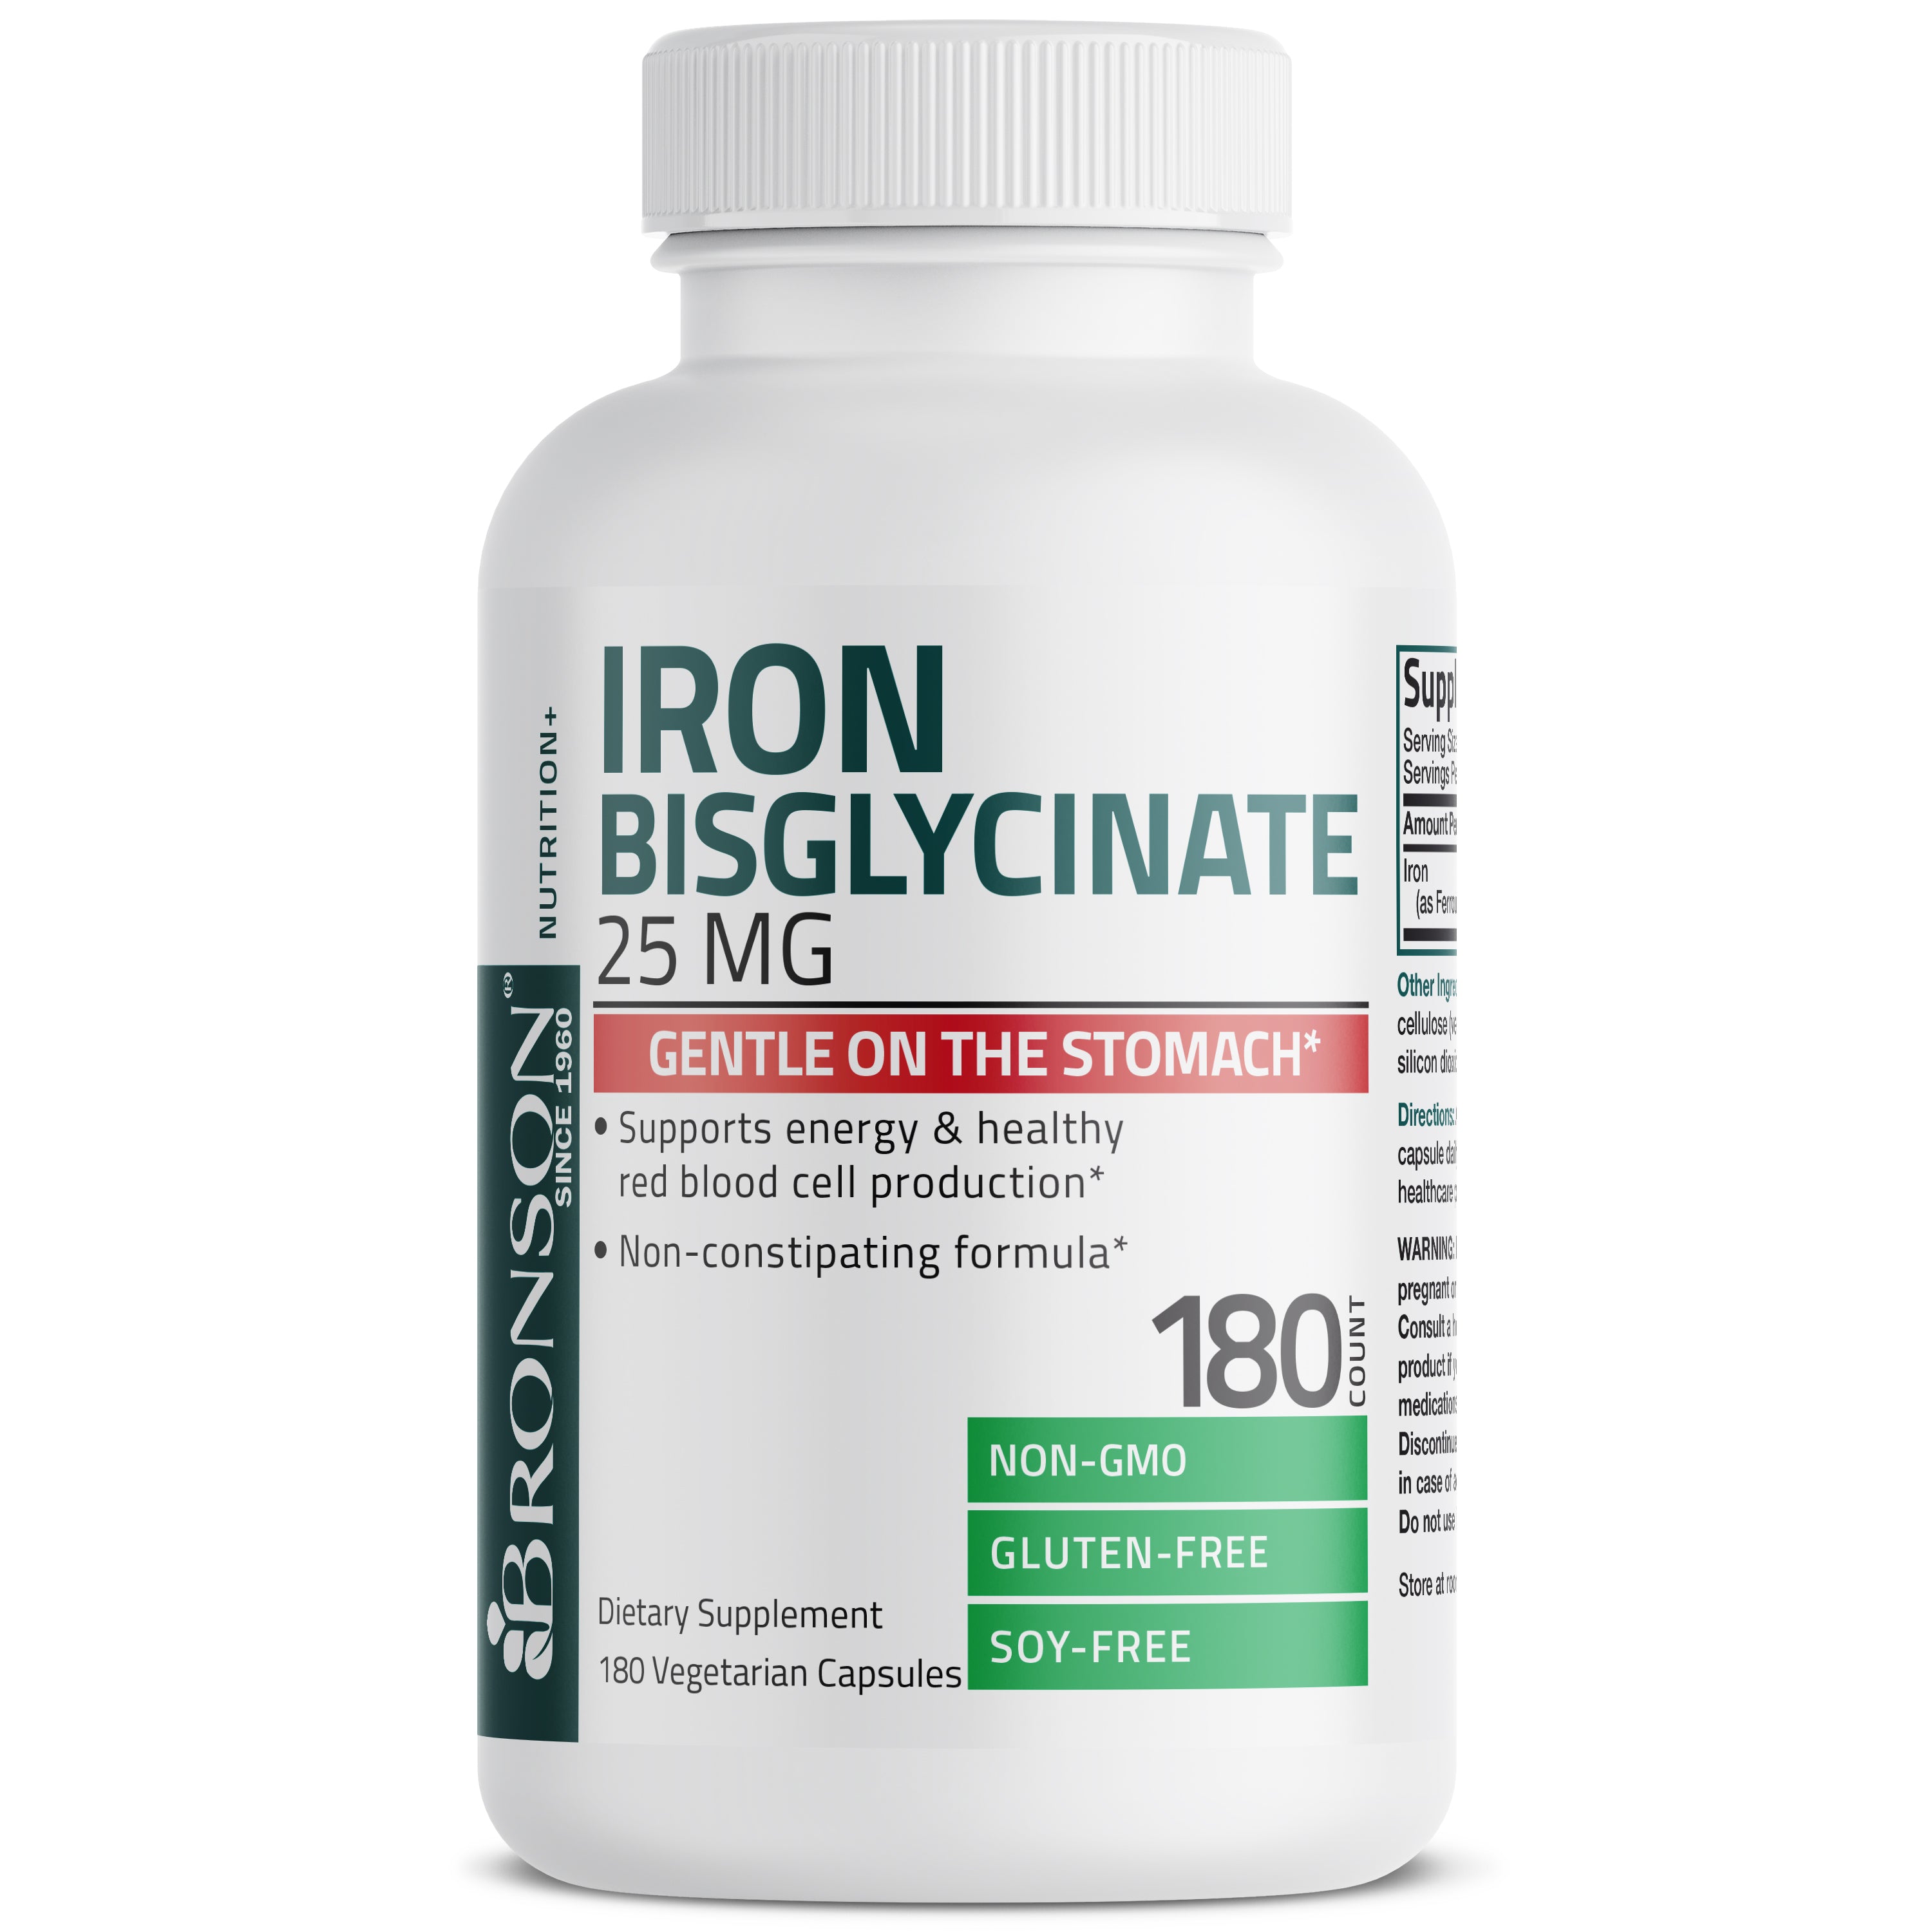 Iron Bisglycinate - 25 mg - 180 Vegetarian Capsules view 1 of 4